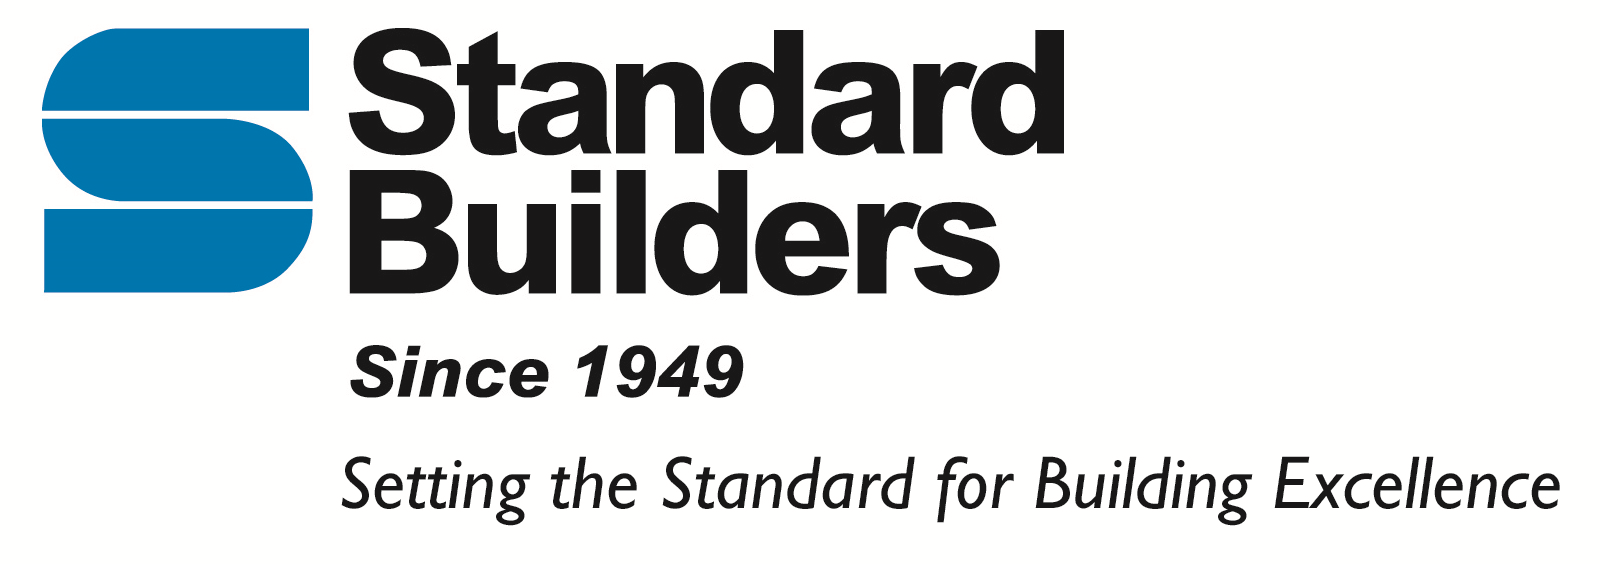 Standard Builders, Inc. logo